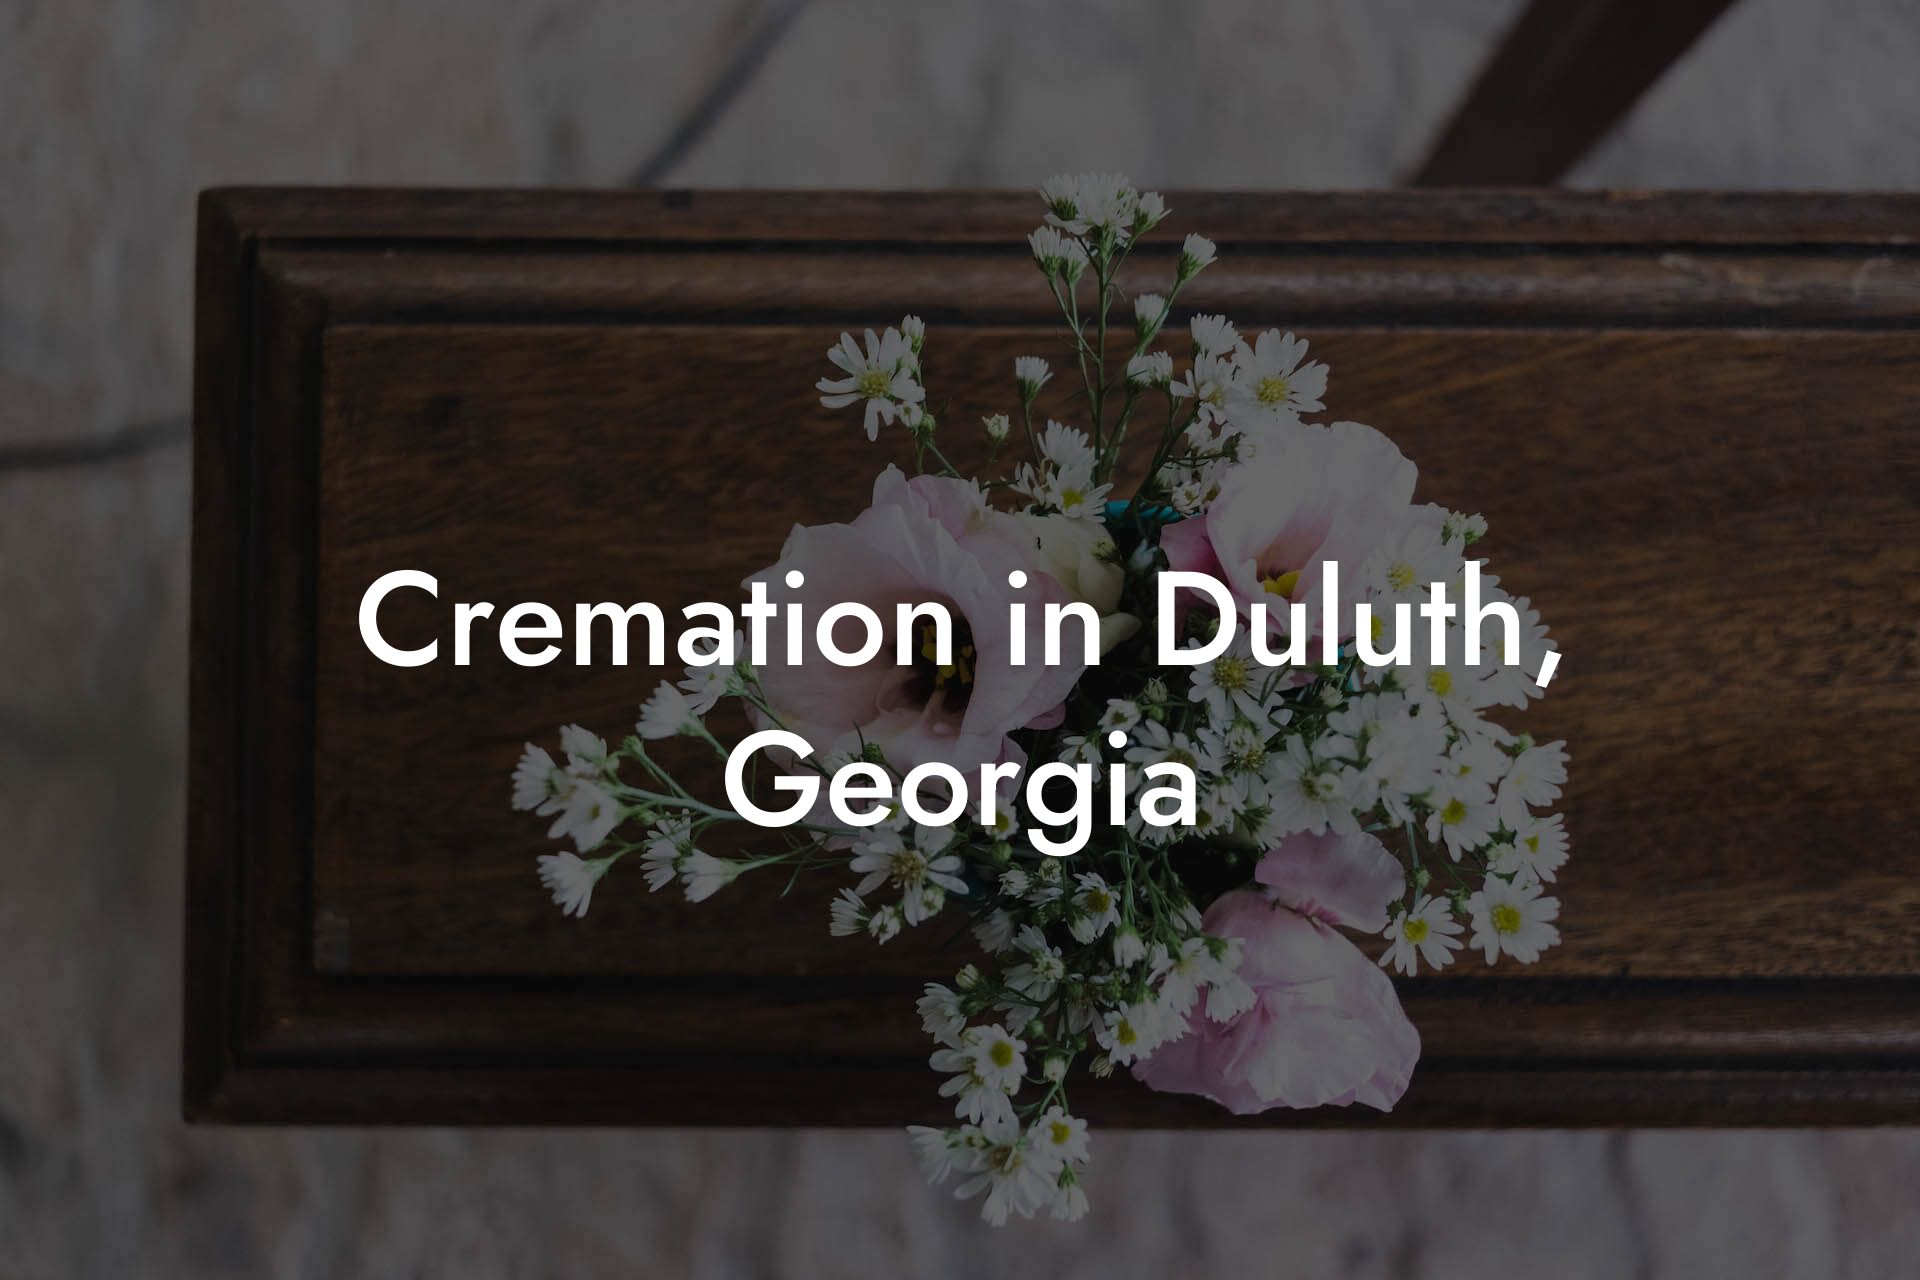 Cremation in Duluth, Georgia